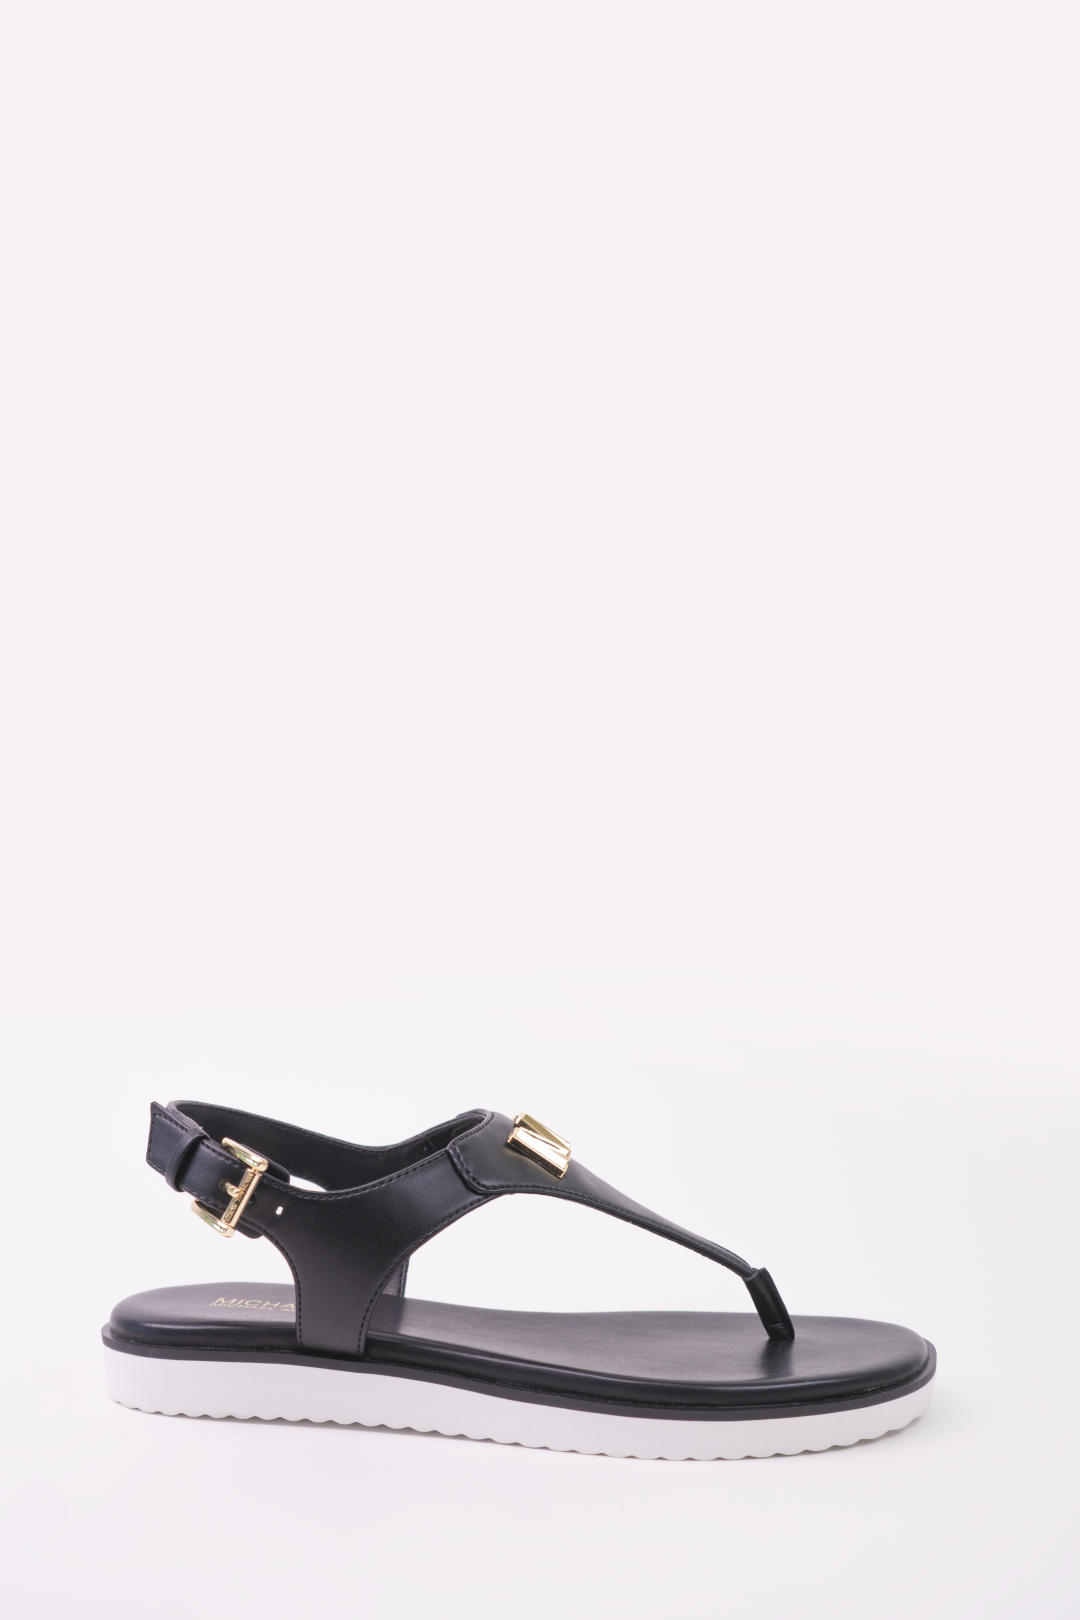 Boutique Option-Michael Kors Black Sandal(Kors-40S2Jlfaal-001)